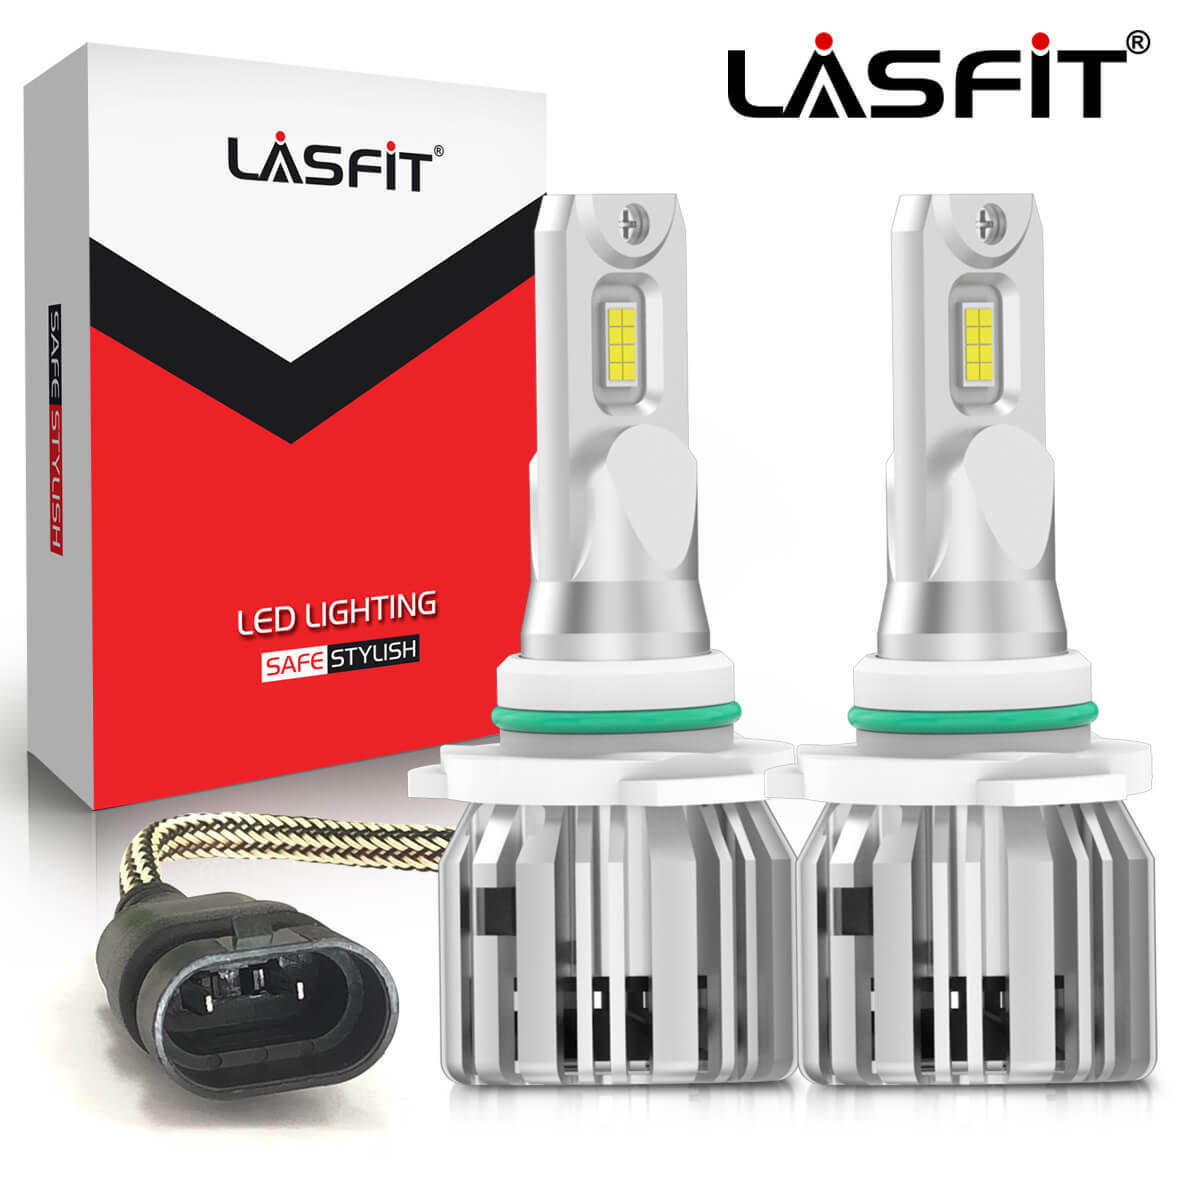 LASFIT LED Fog Light Bulbs 9145 9140 H10 White for Ford F150 F250 F350 2004-2021